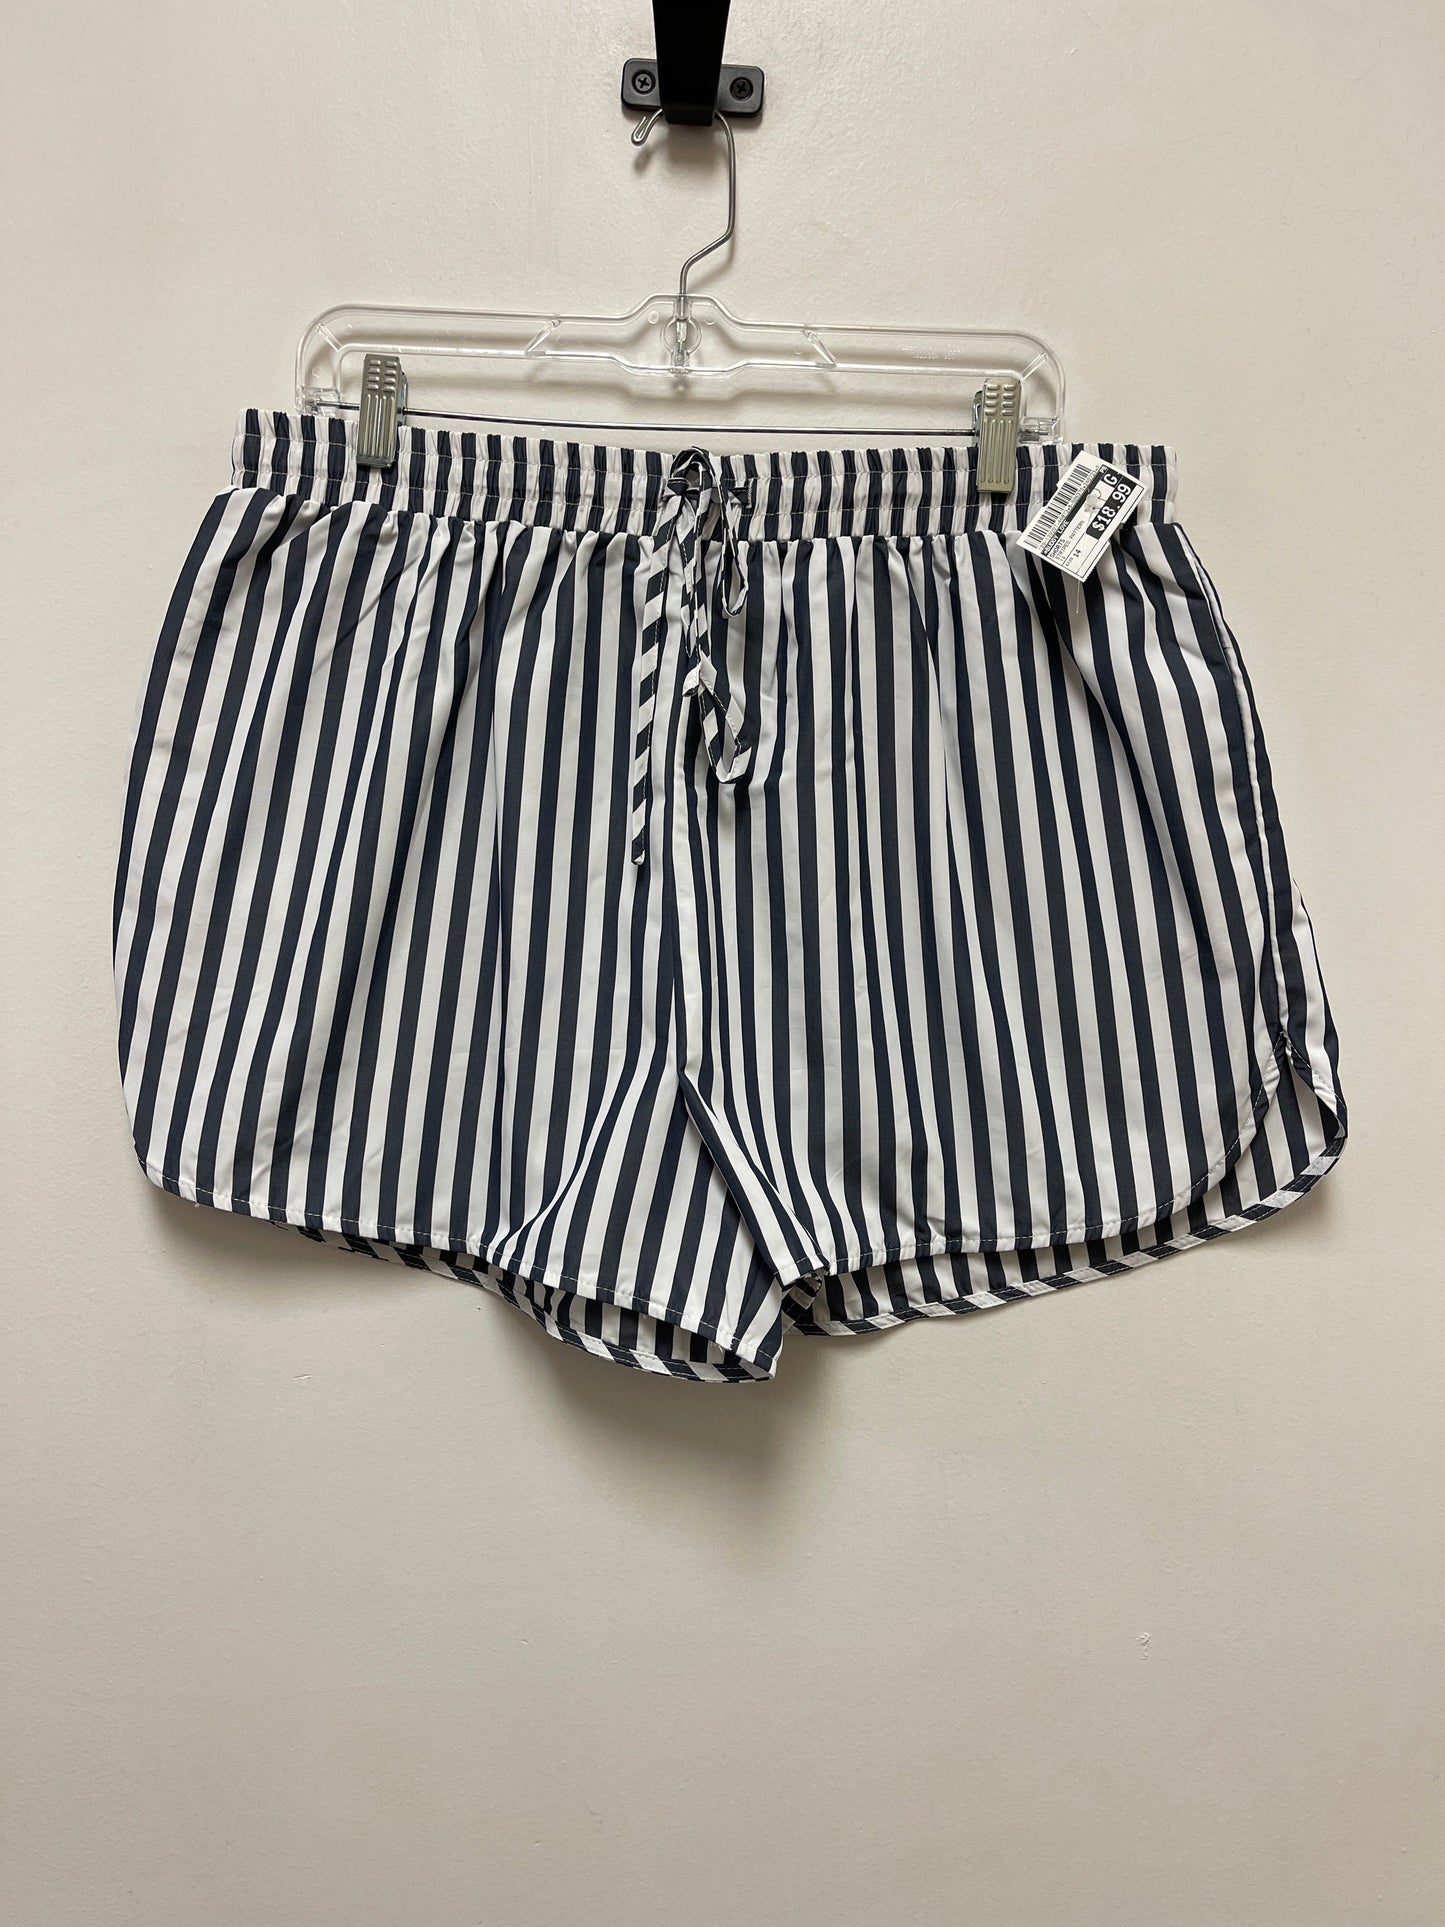 Striped Pattern Shorts Buddy Love, Size 14